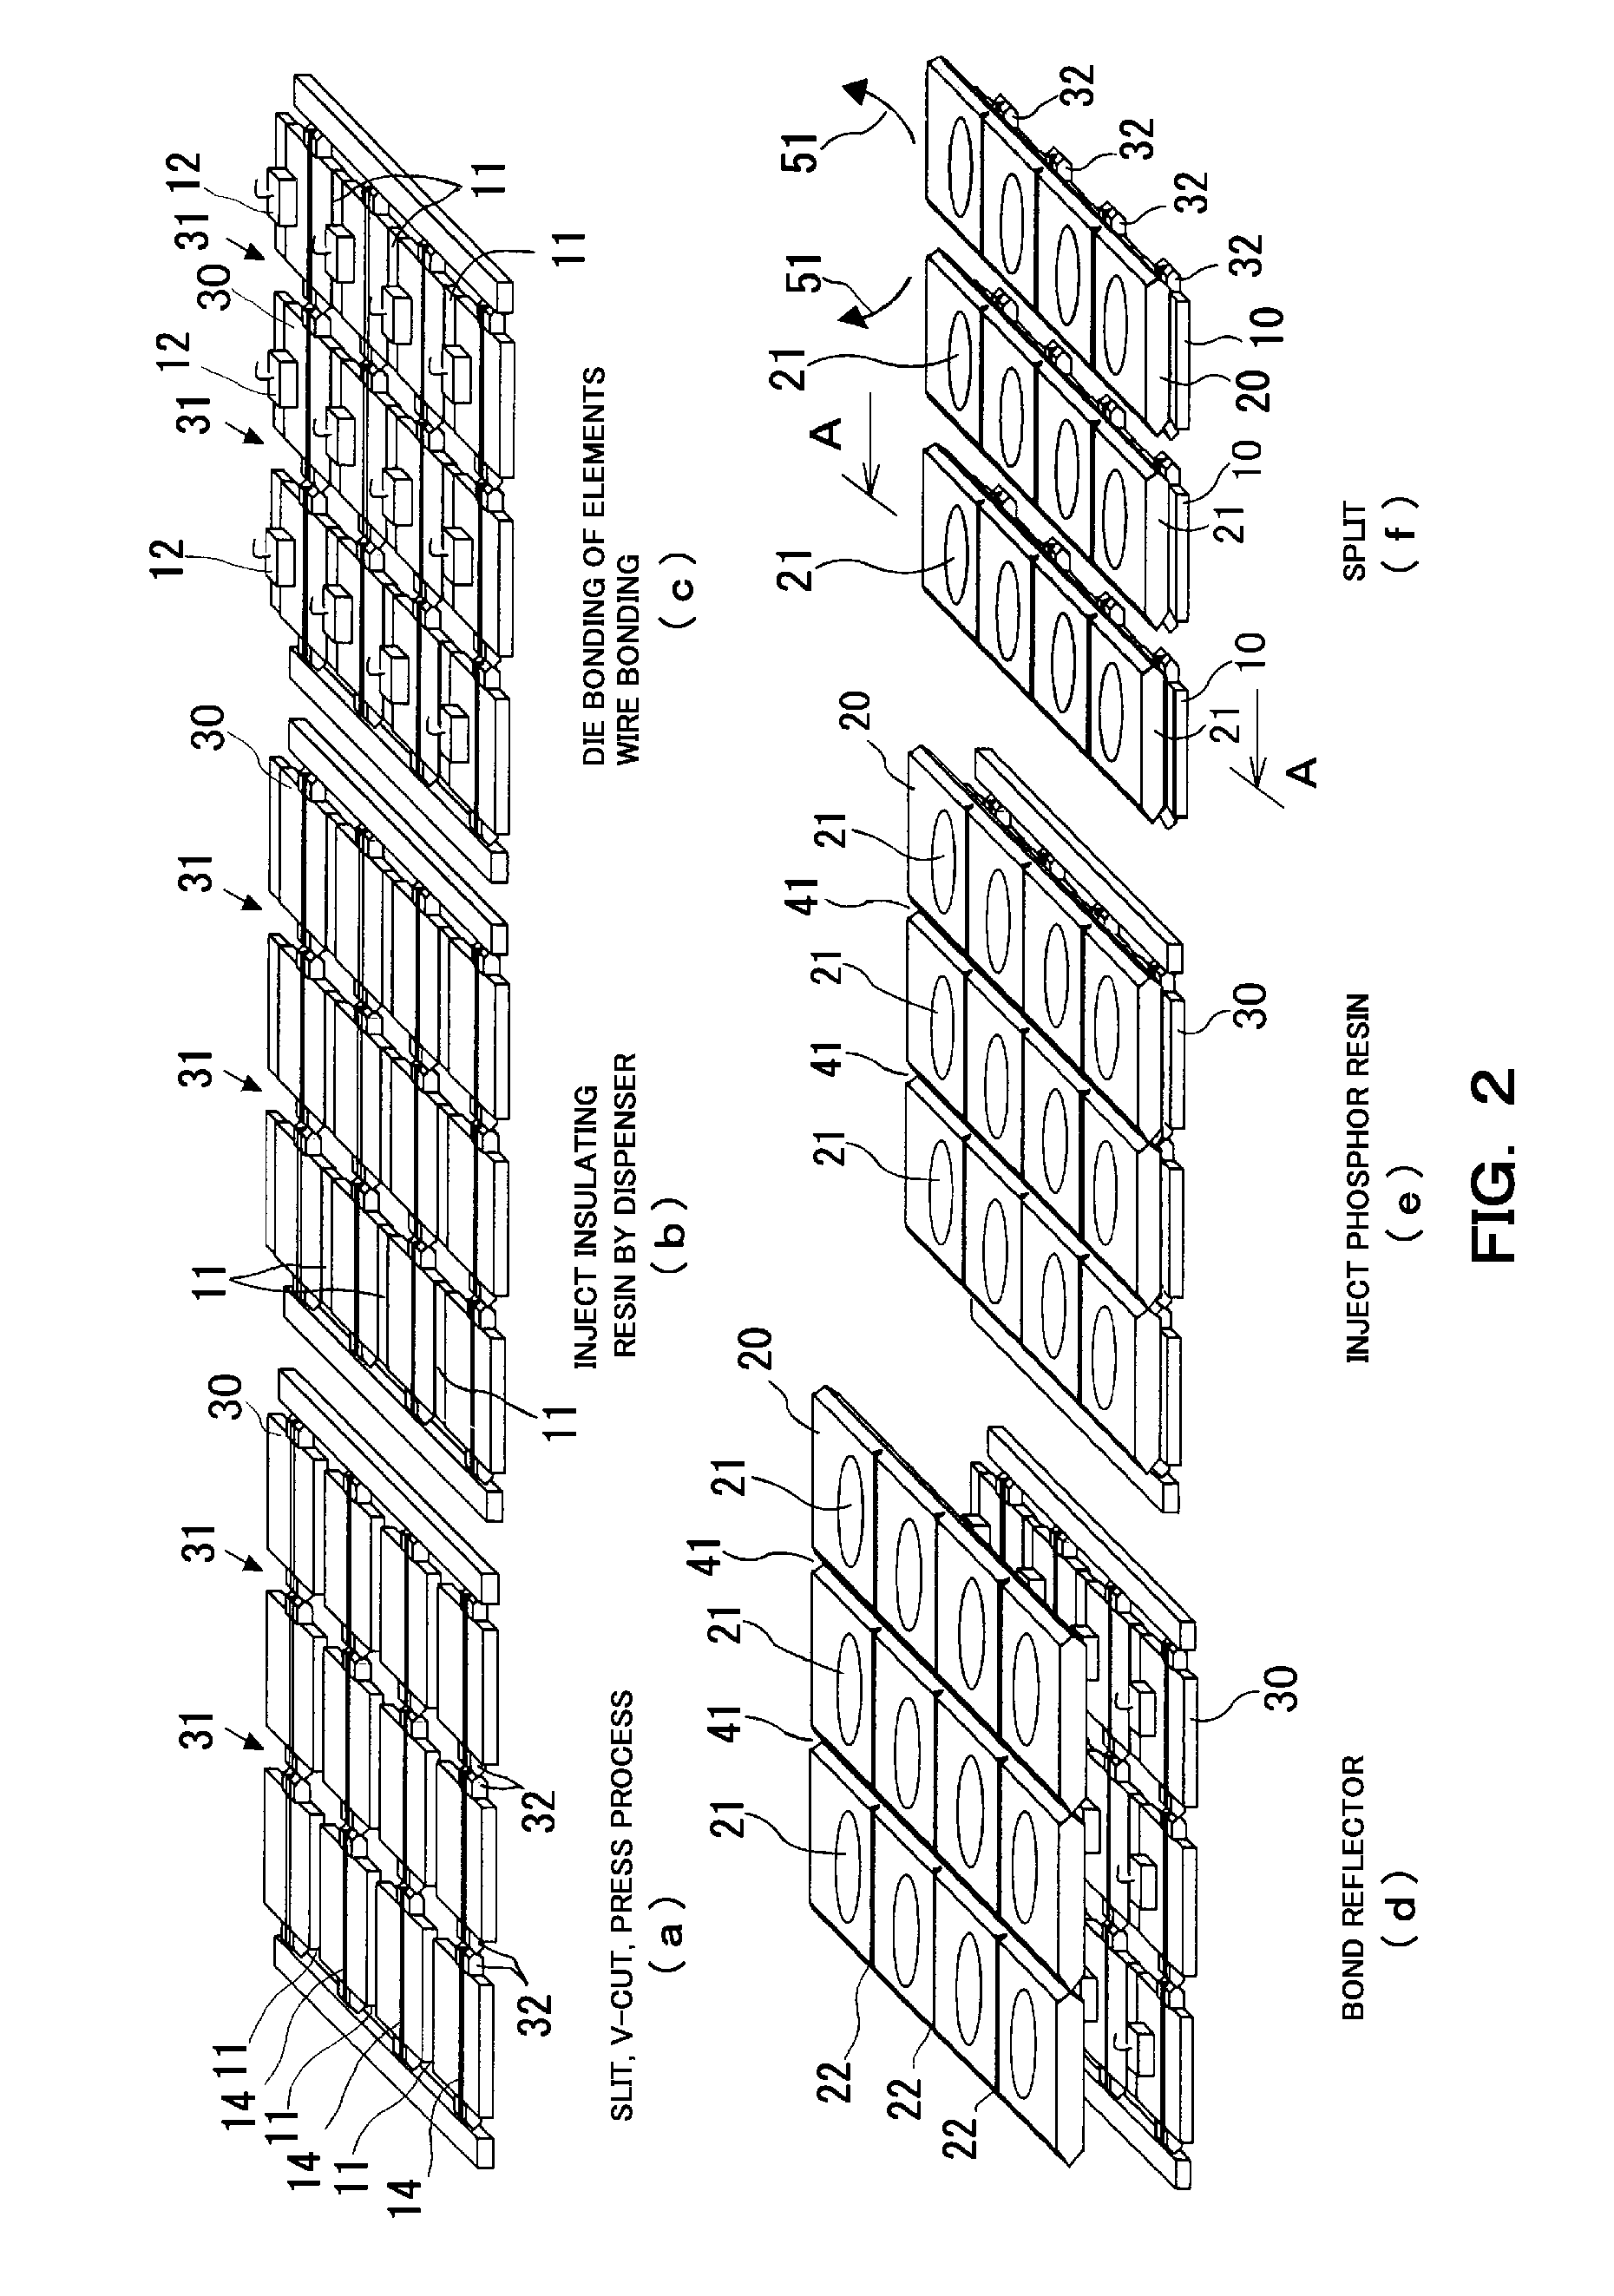 Method for manufacturing light emitting apparatus, light emitting apparatus, and mounting base thereof